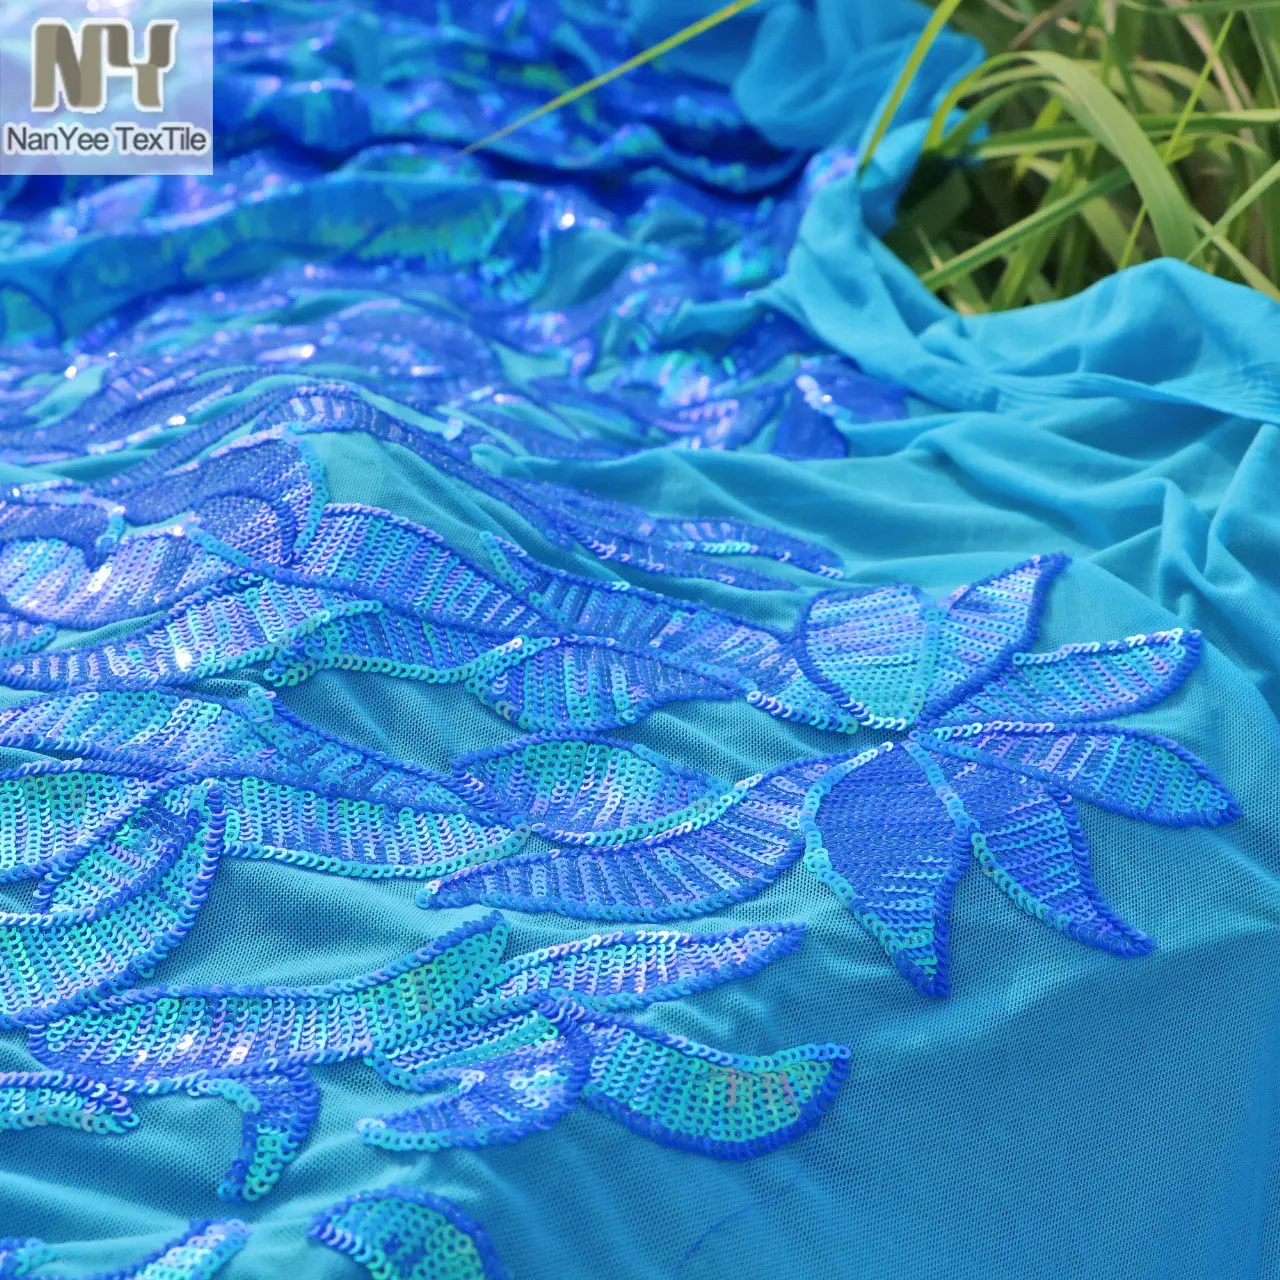 Nanyee Textile Pearl Blue Iridescent Damask Sequin Fabrics On Elastic Nylon Mesh